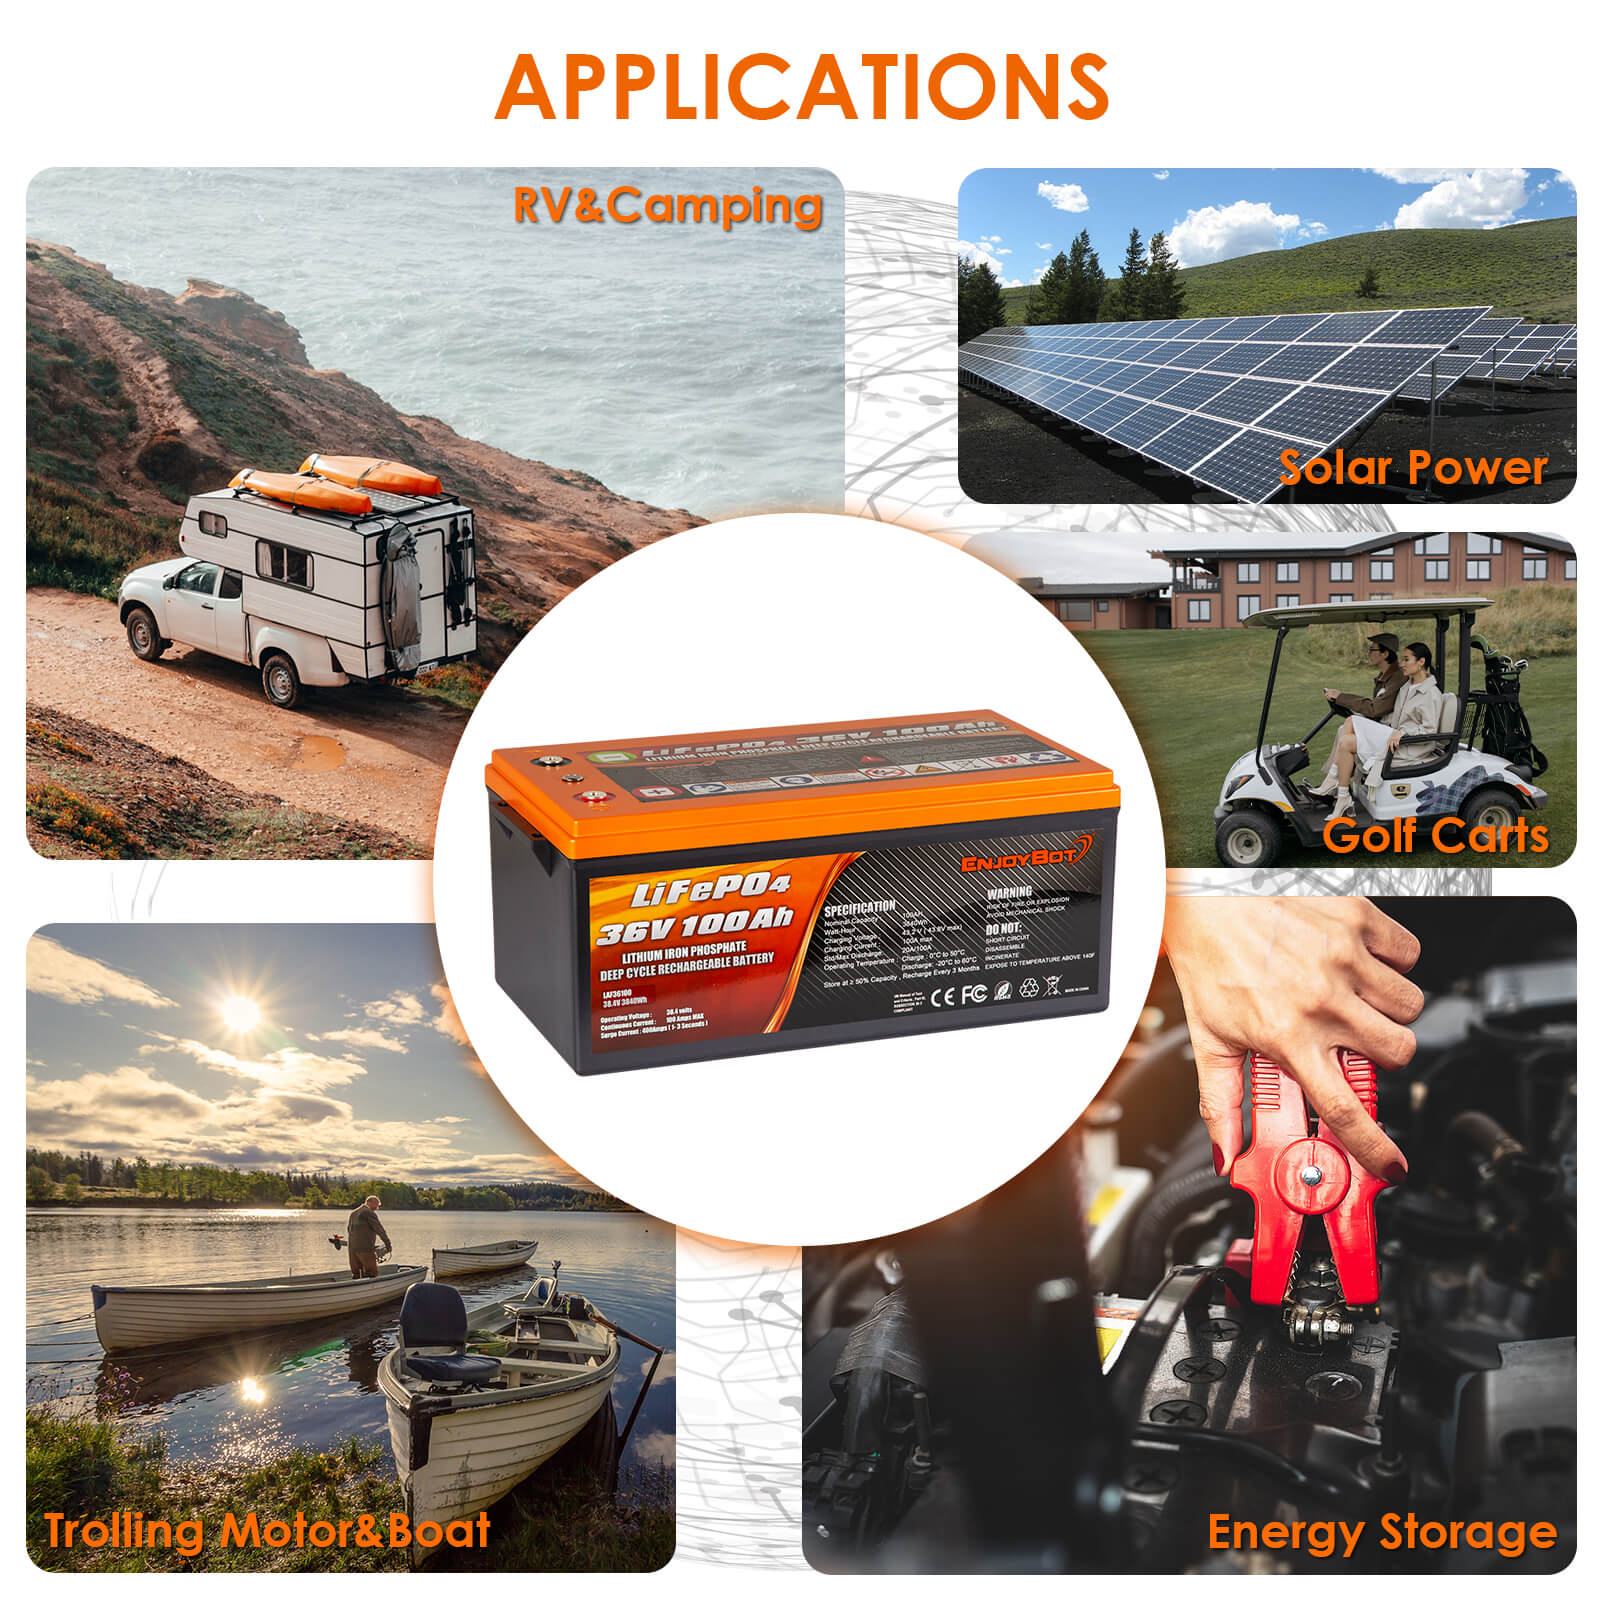 Enjoybot 36v 100ah LiFePO4 Battery - Used for RV, Champer, Solar Off-grid, Golf Cart, Trolling Motor, Energy Storage